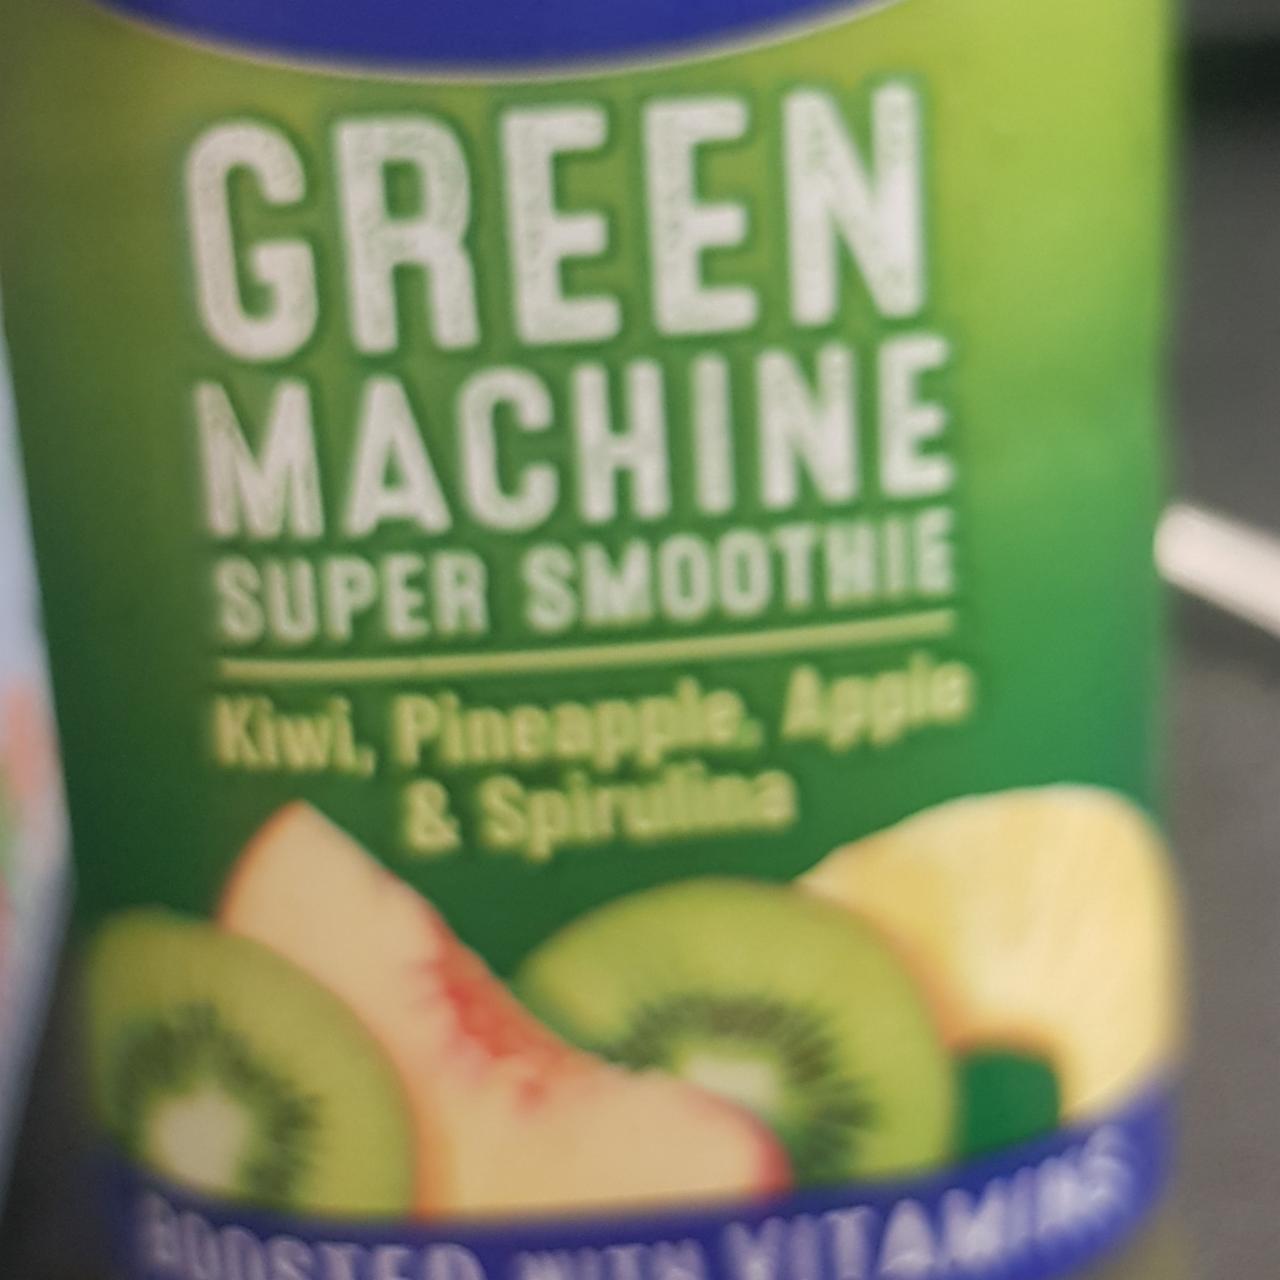 Fotografie - Green machine super smoothie Kiwi, Pineapple, Apple & Spirulina Naked